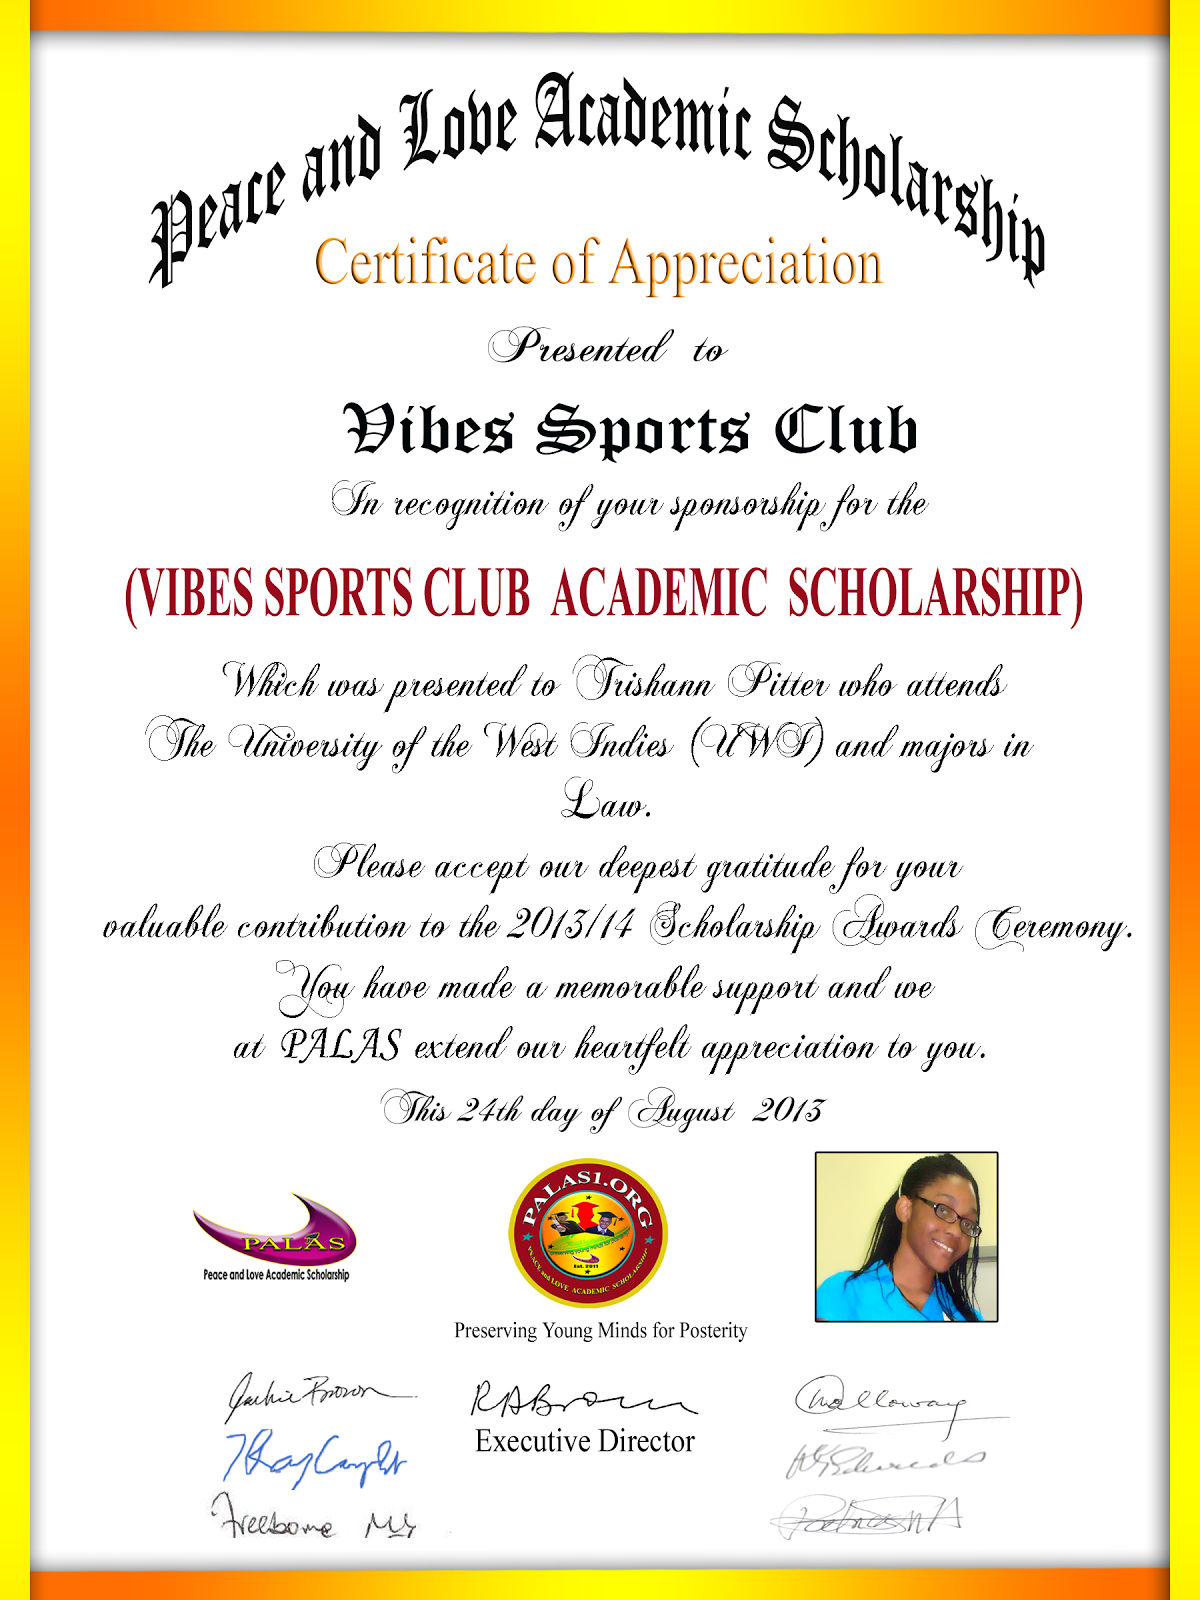 Vibes Sports Club Academic Scholarship (2013)